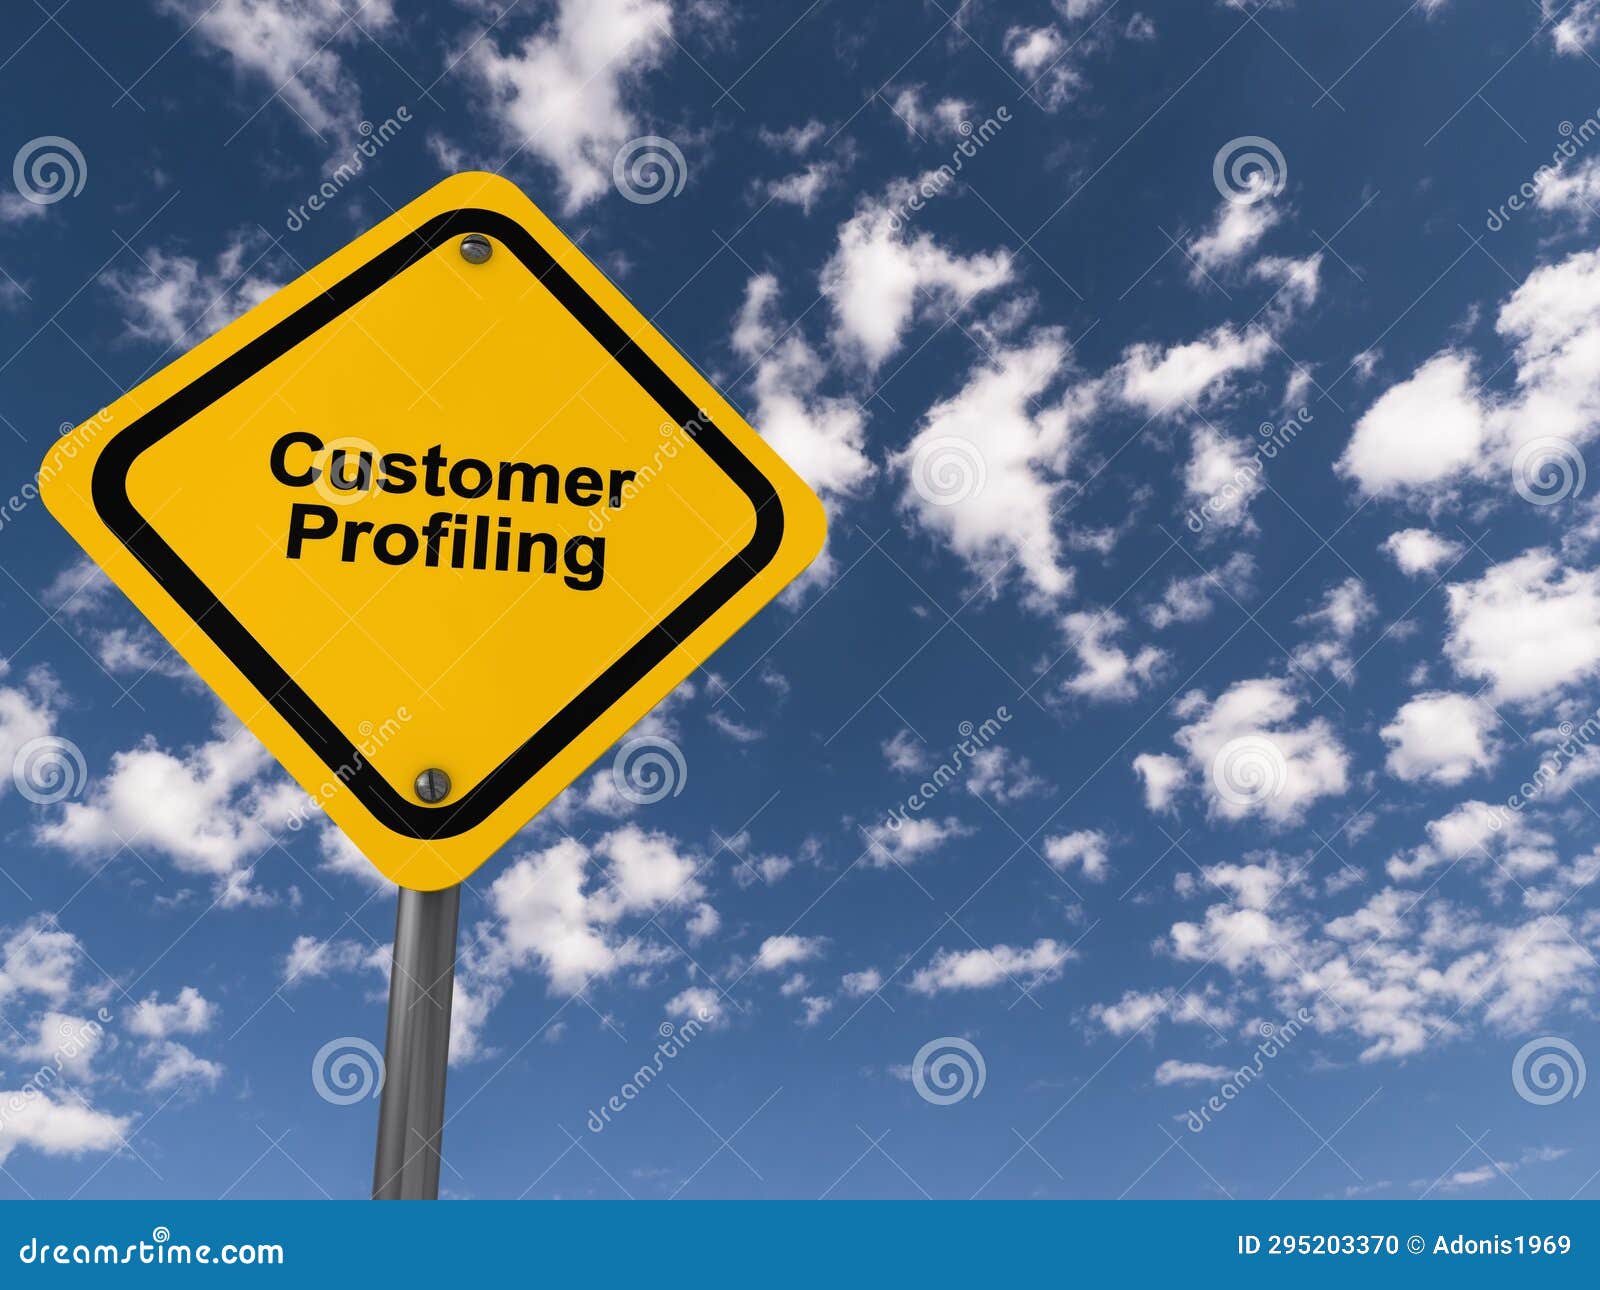 customer profiling traffic sign on blue sky